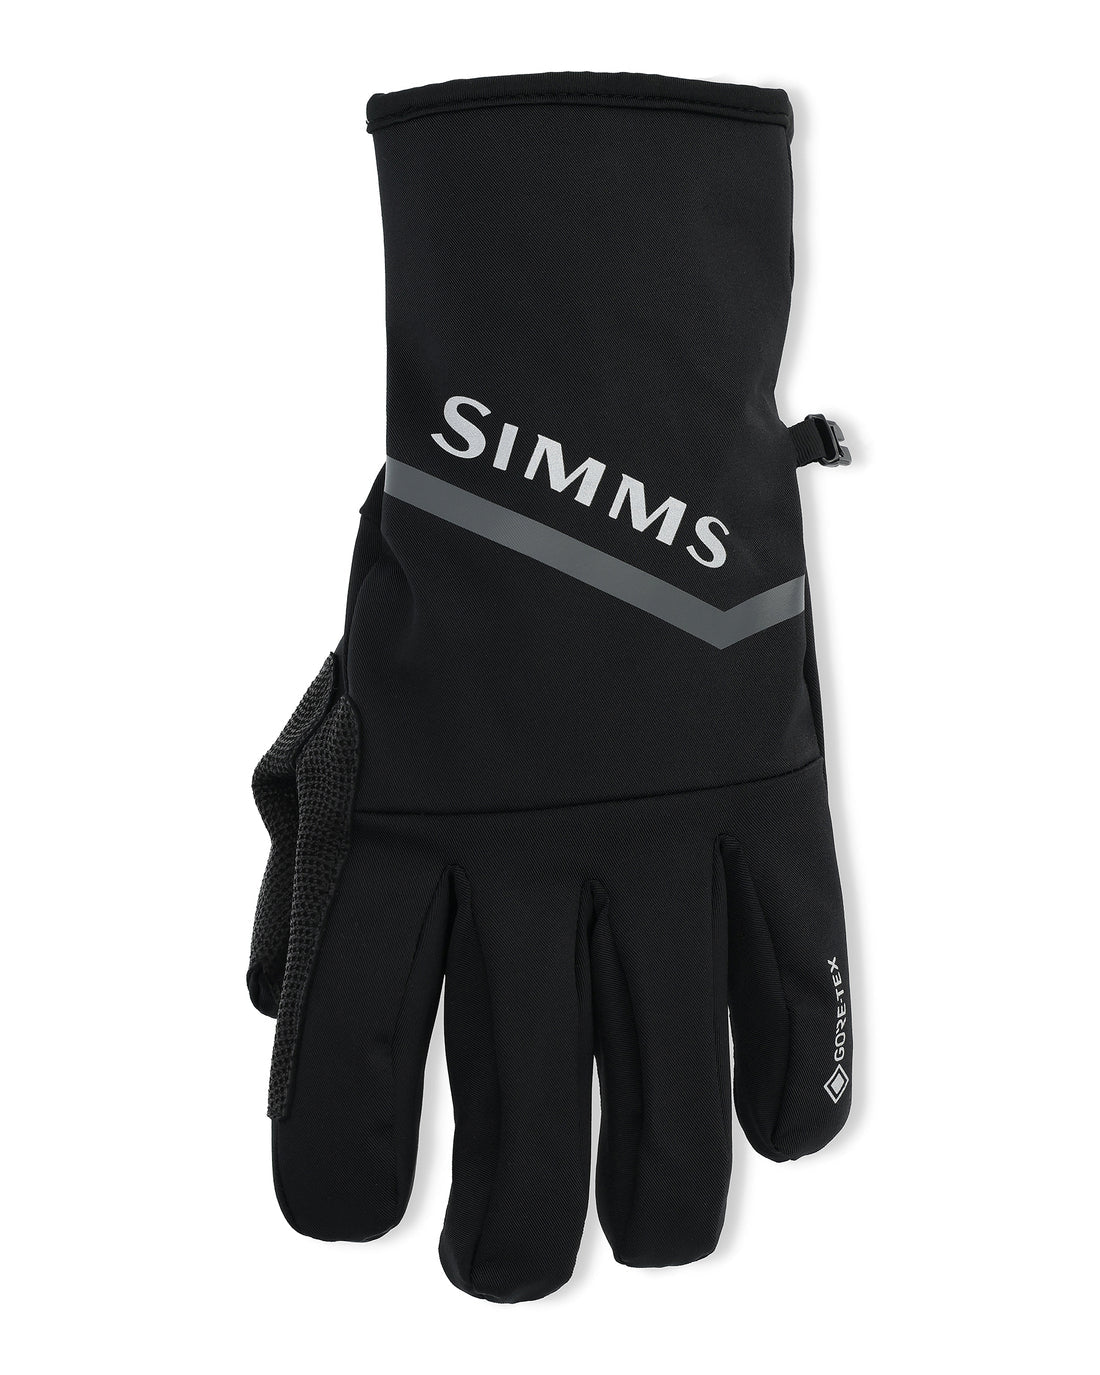 Simms ProDry Gore-Tex Fishing Glove + Liner